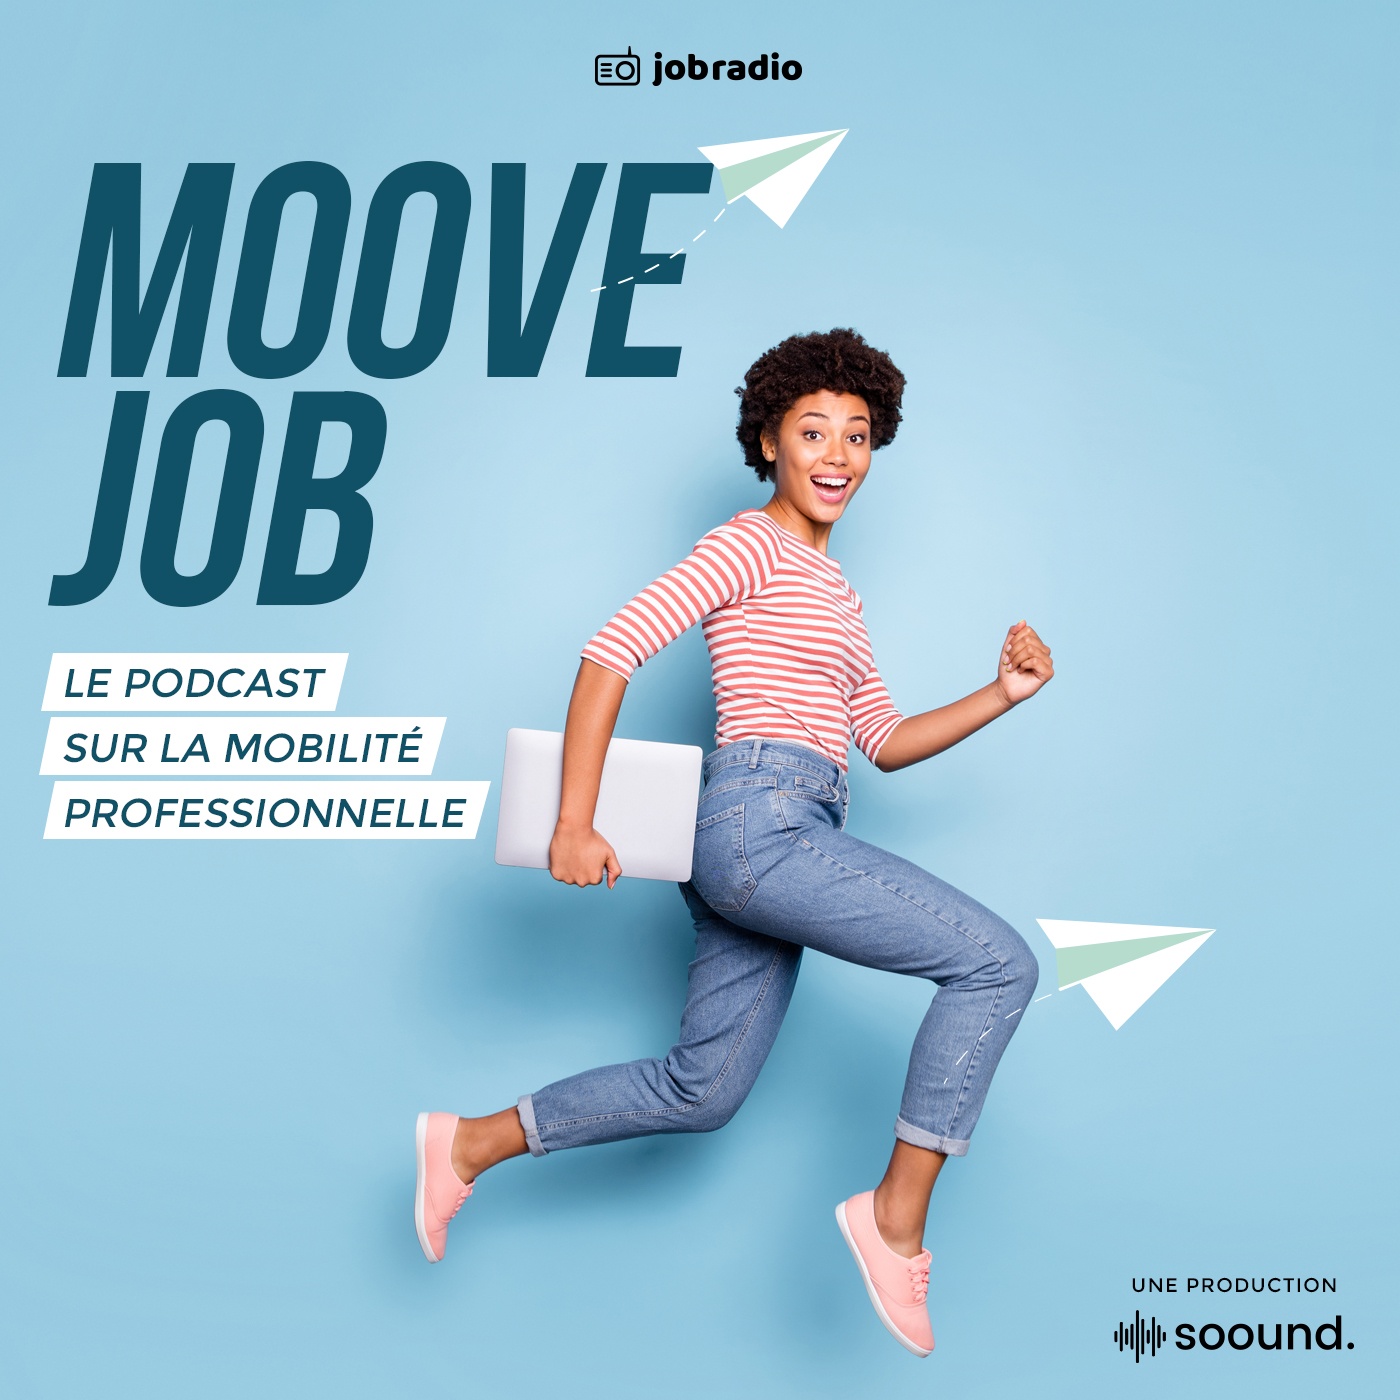 Artwork for podcast Moove Job